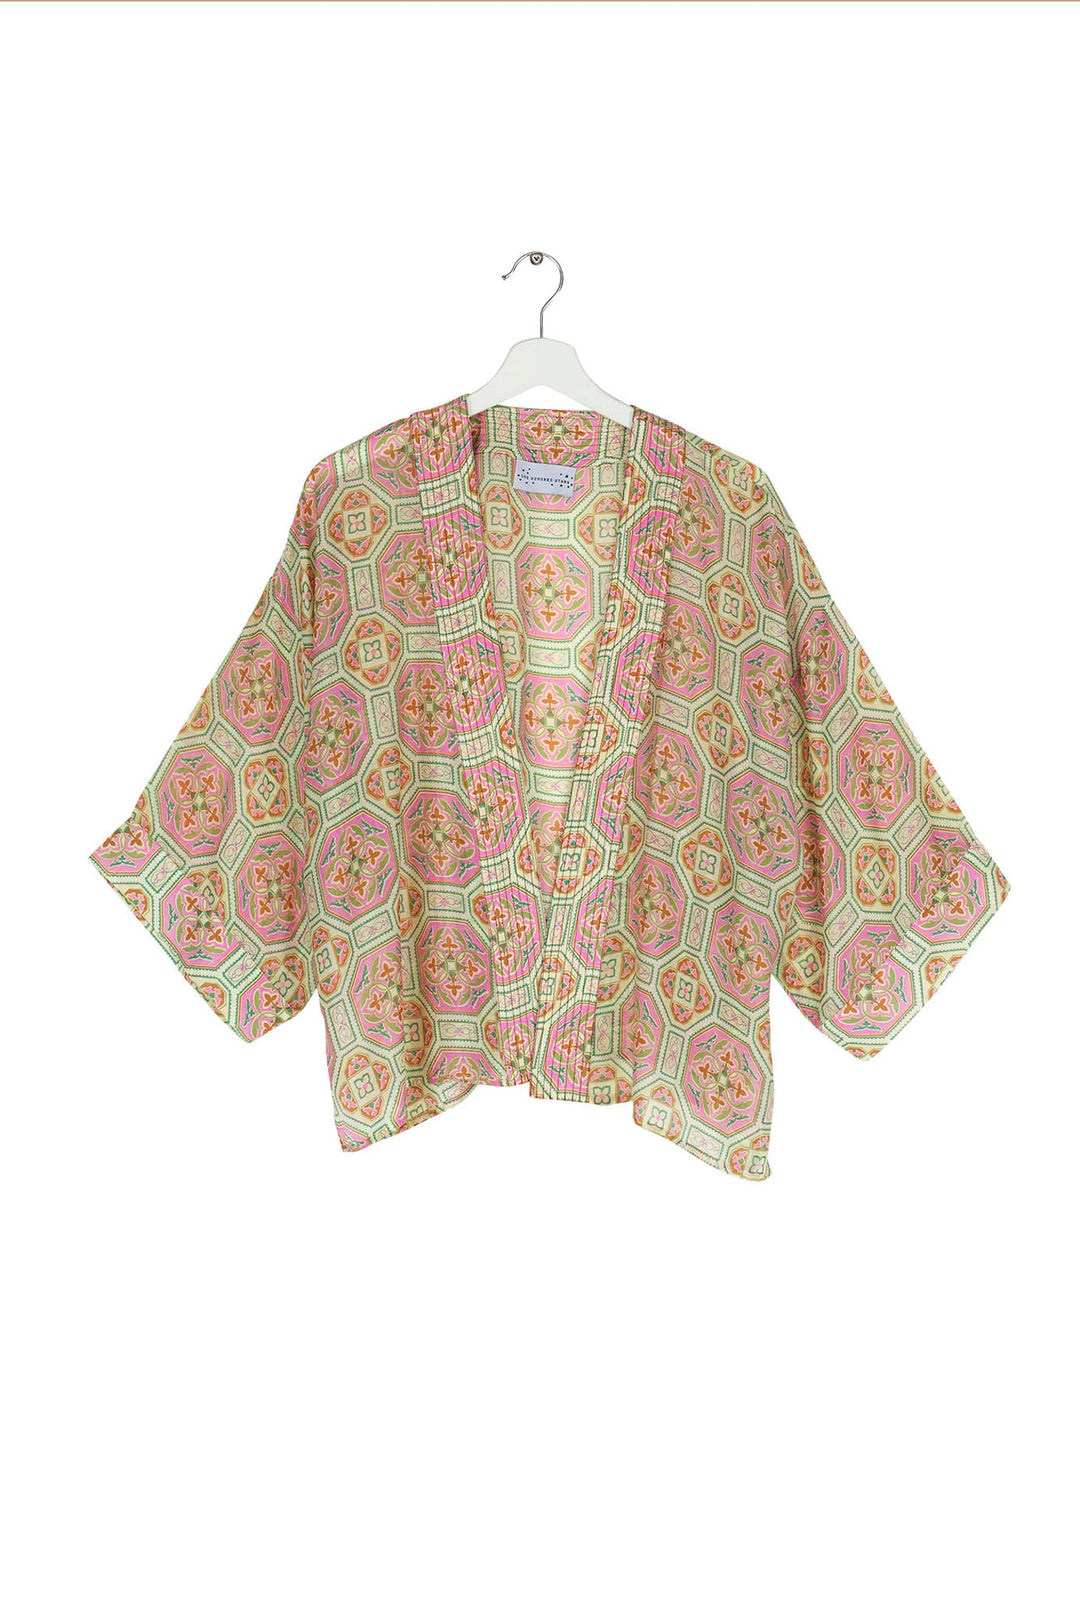 Women's short kimono in vintage tiles pink print by One Hundred Stars